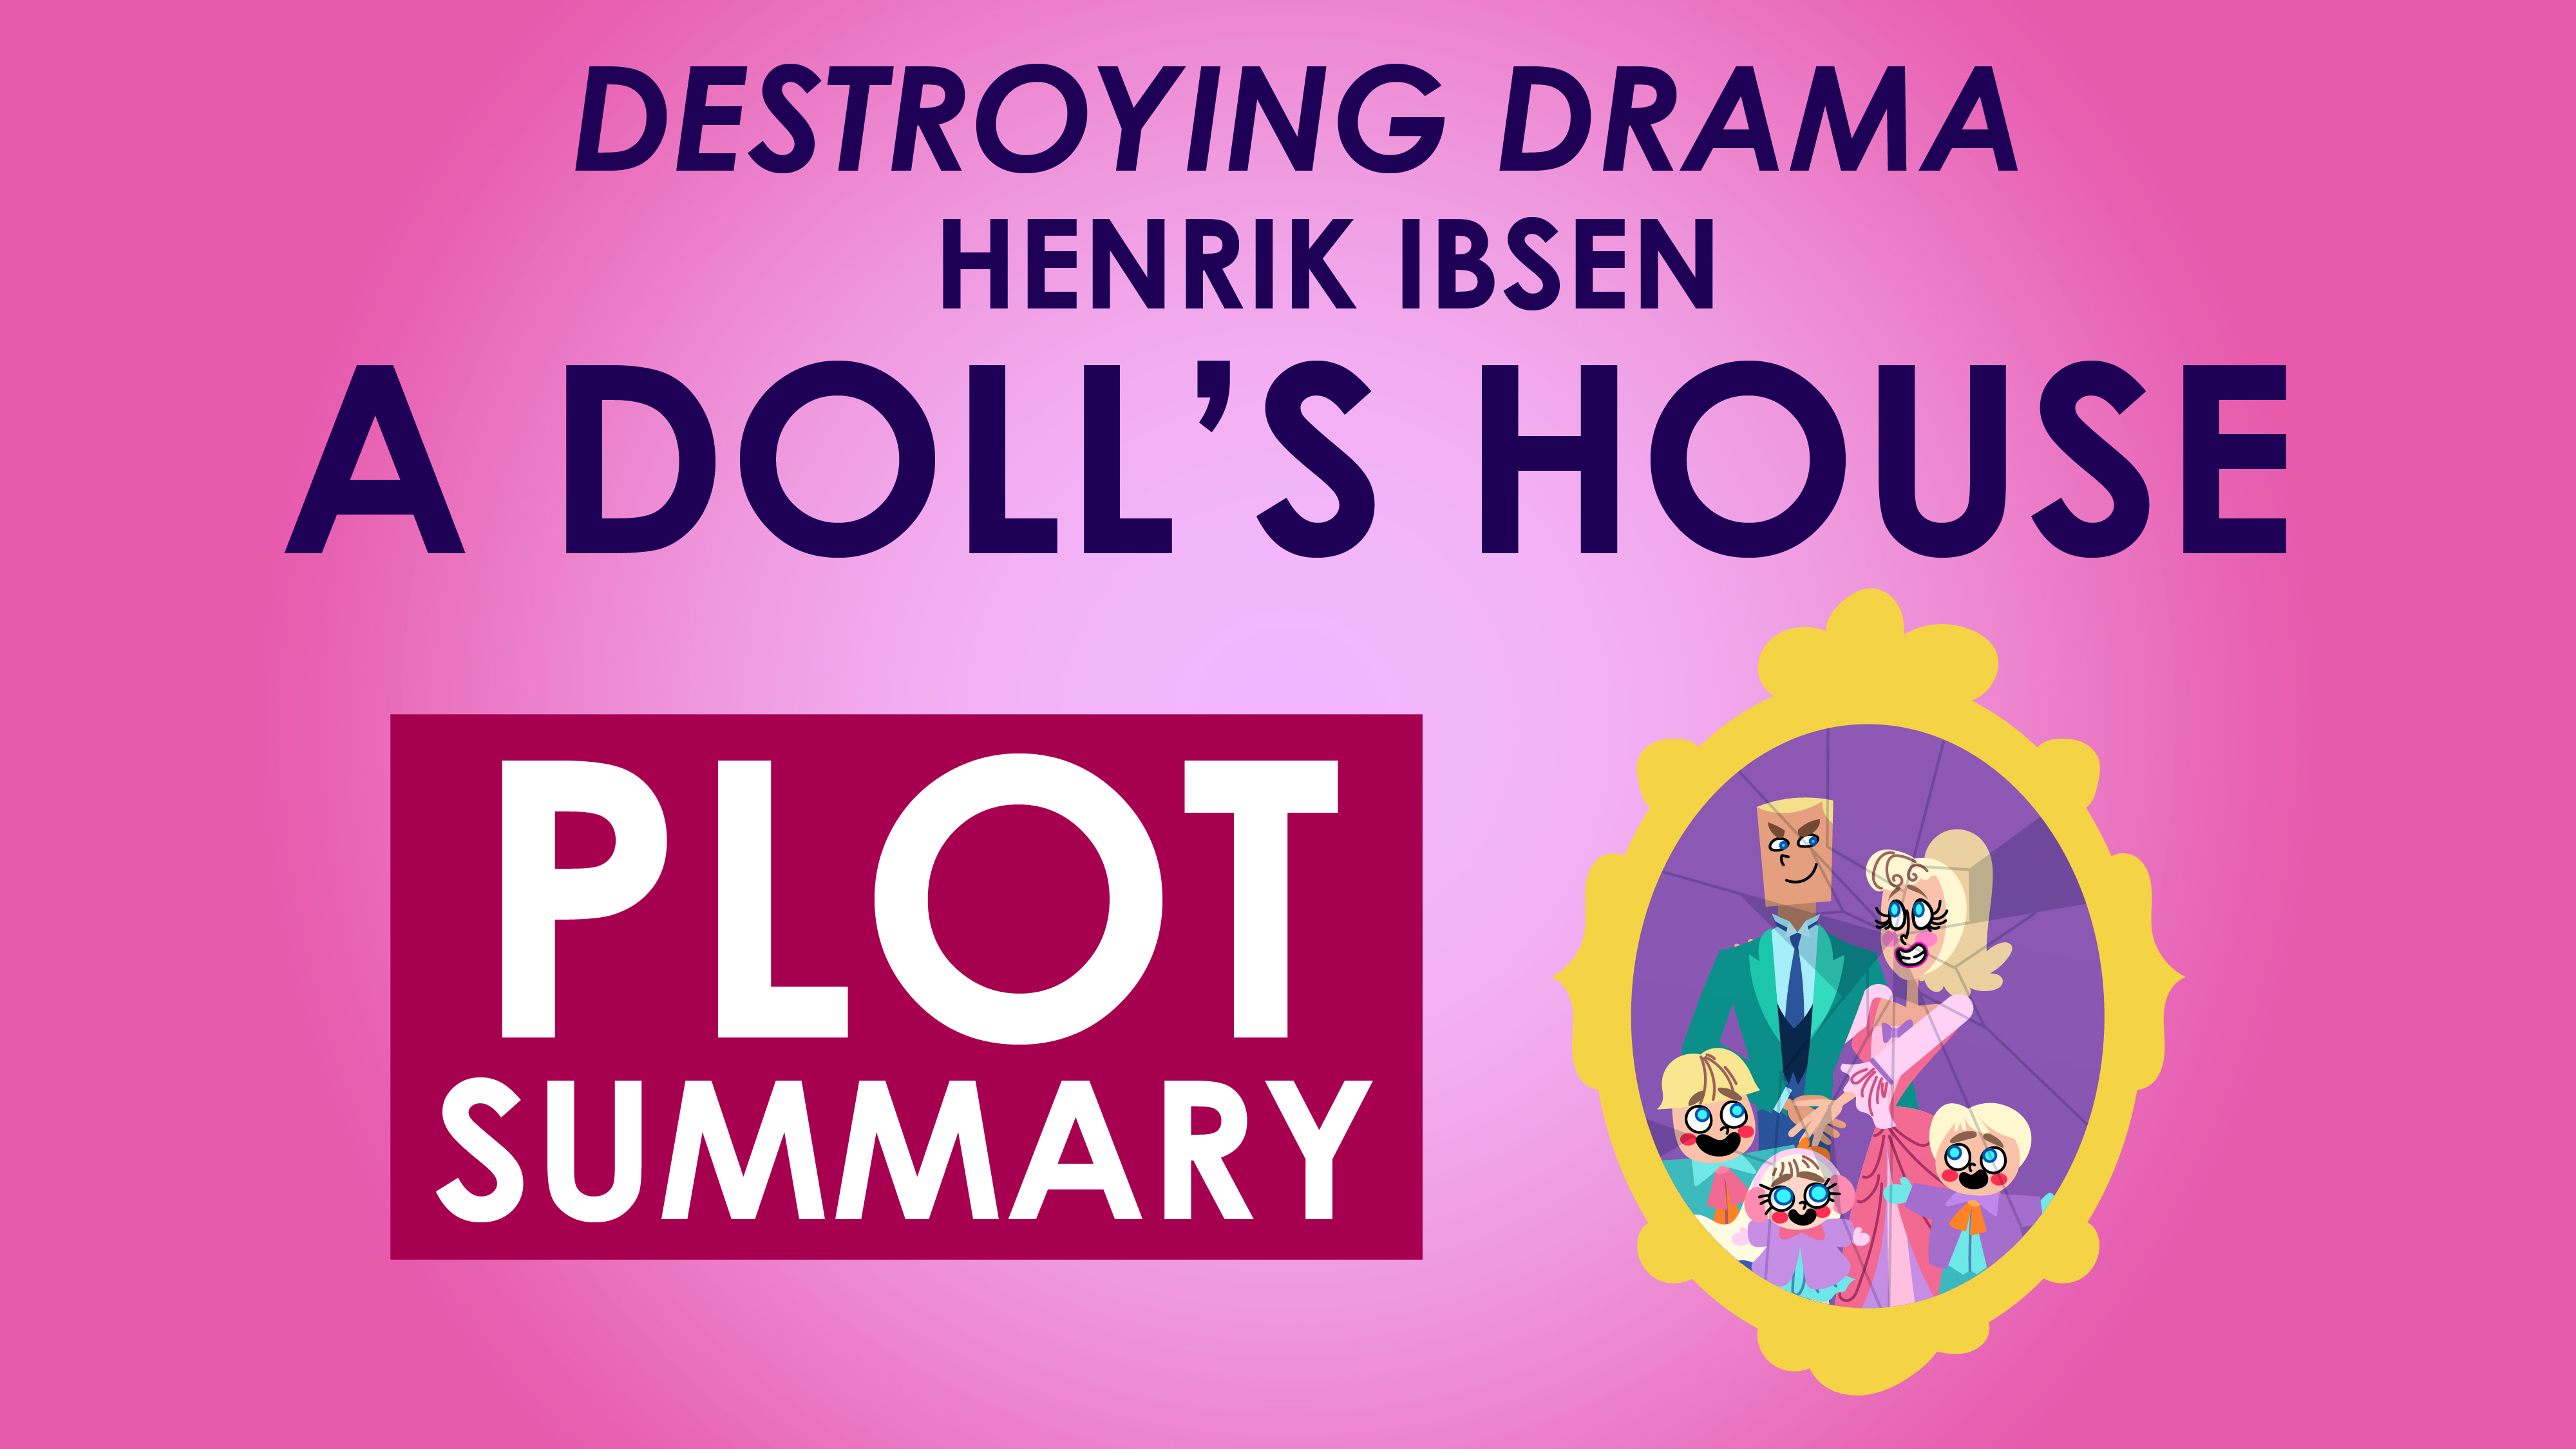 A Doll's House - Henrik Ibsen - Plot Summary - Destroying Drama Series